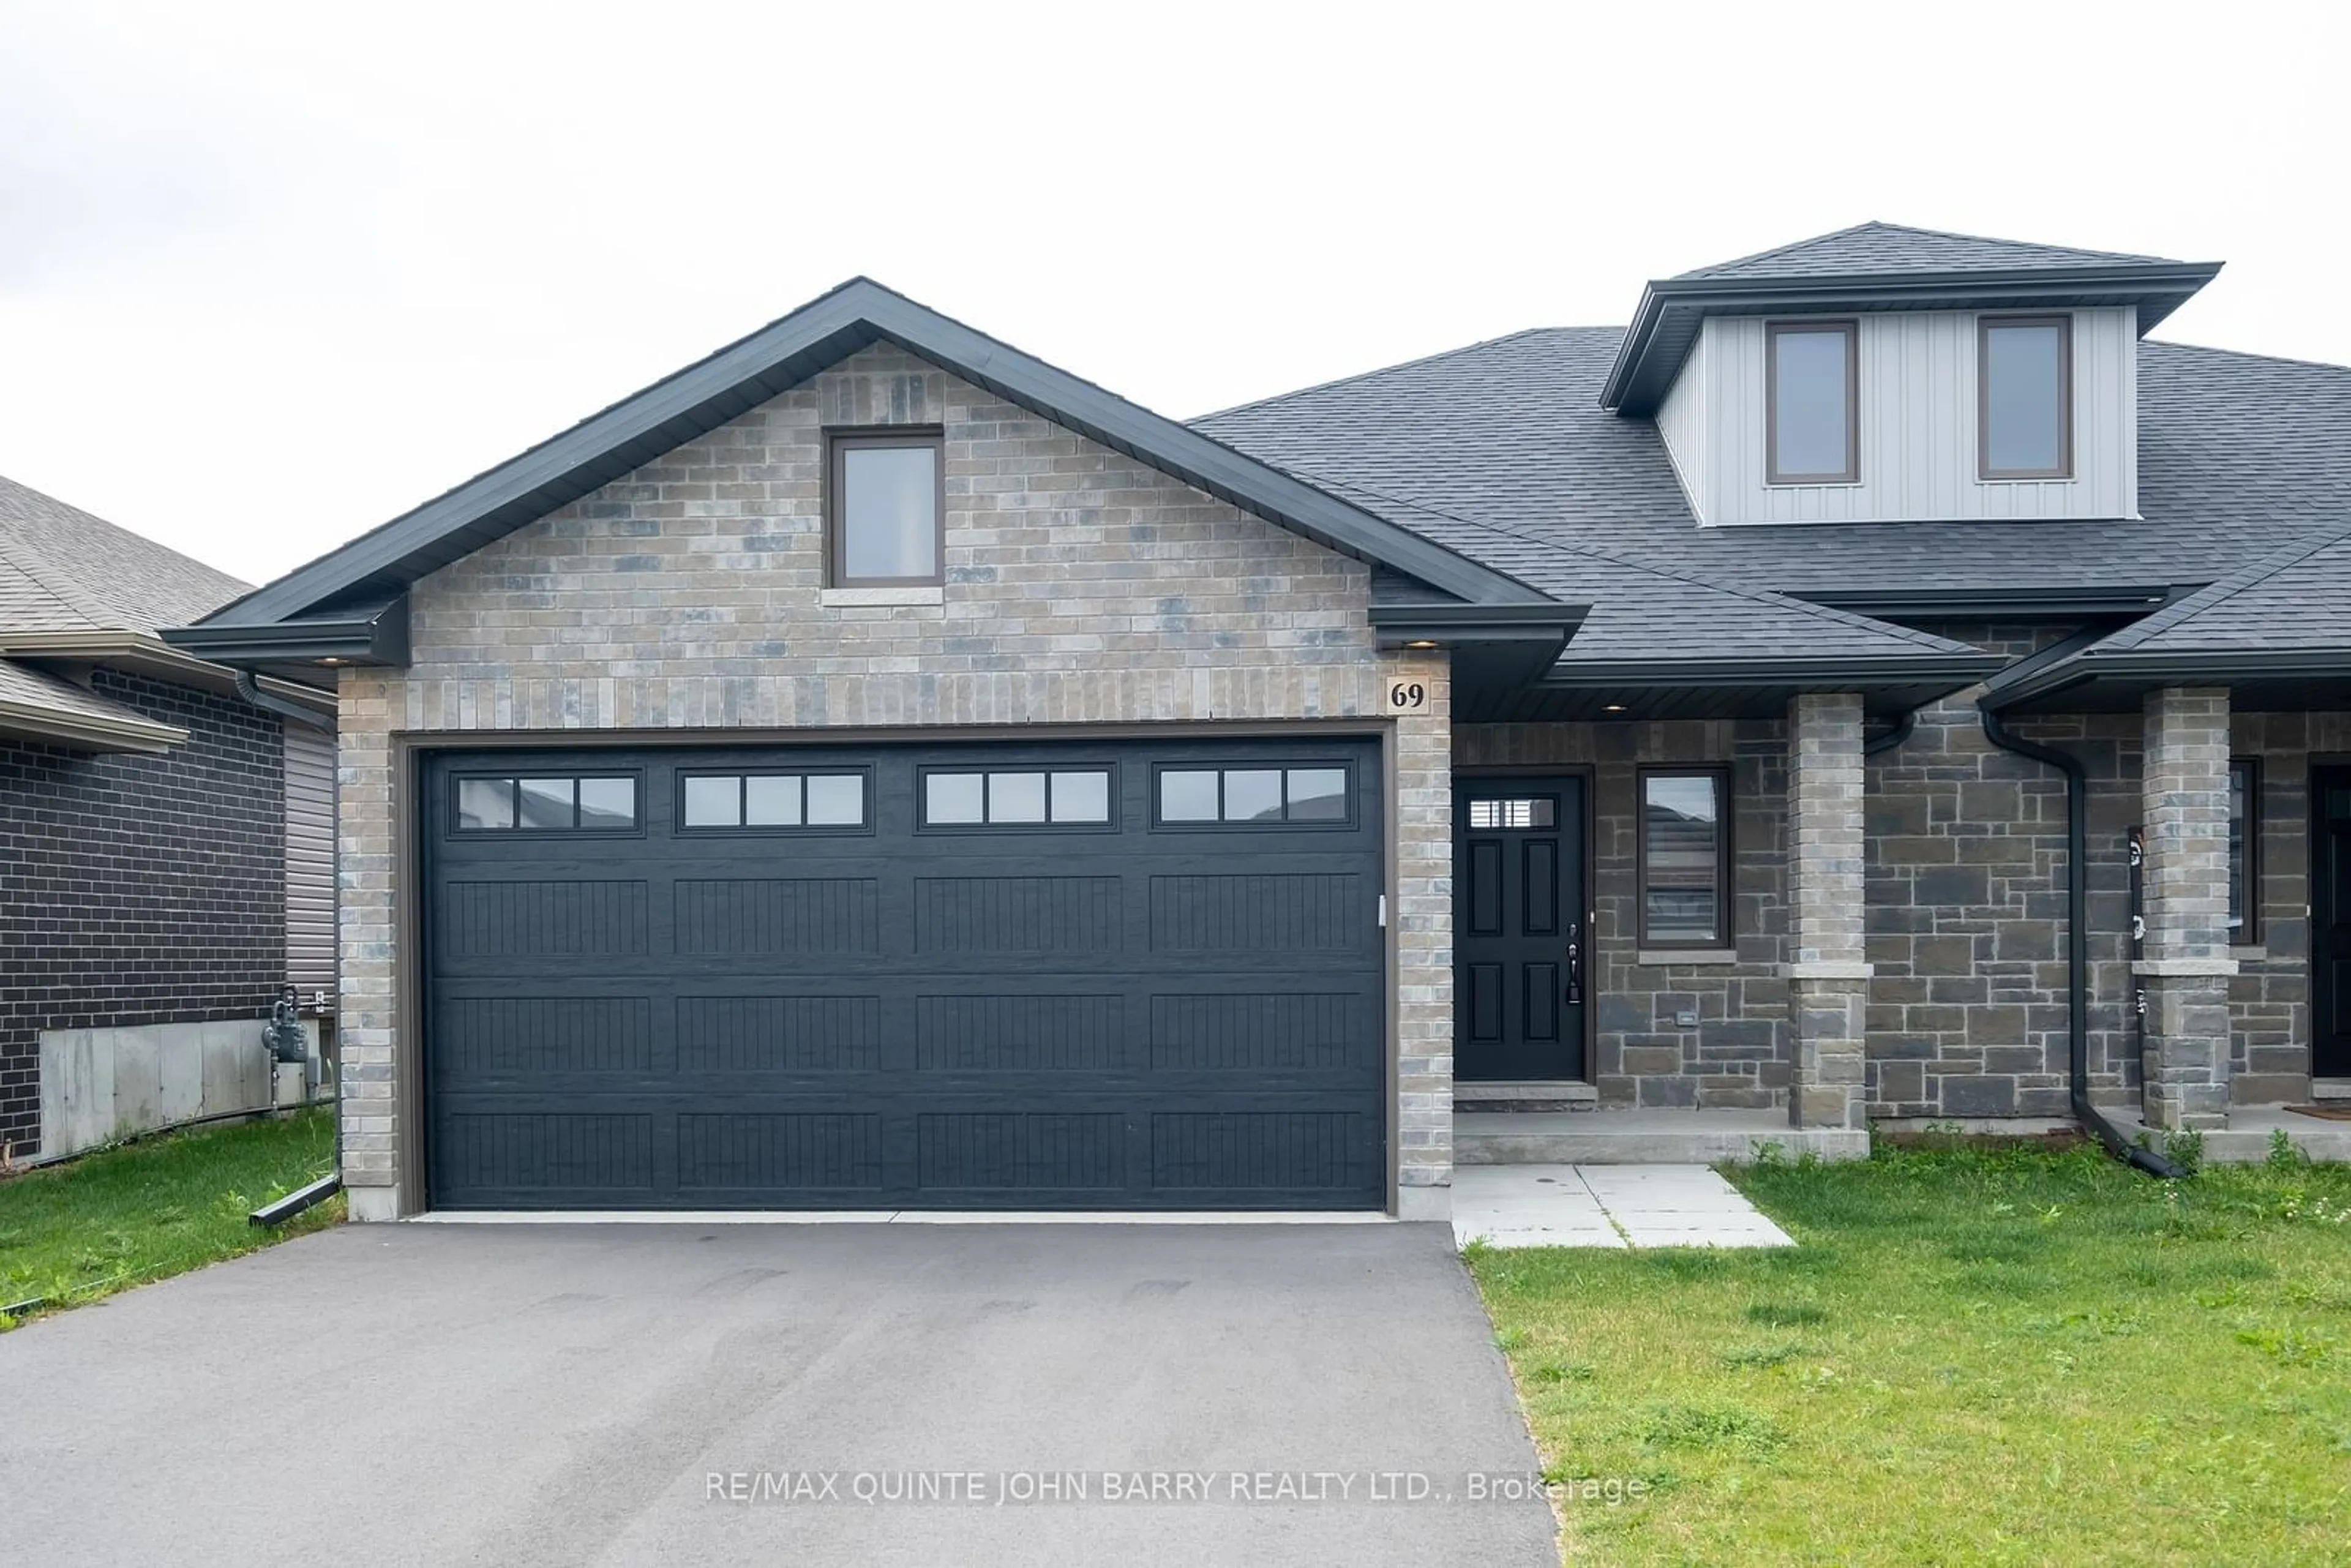 Home with brick exterior material for 69 Hillside Meadow Dr, Quinte West Ontario K8V 0J5